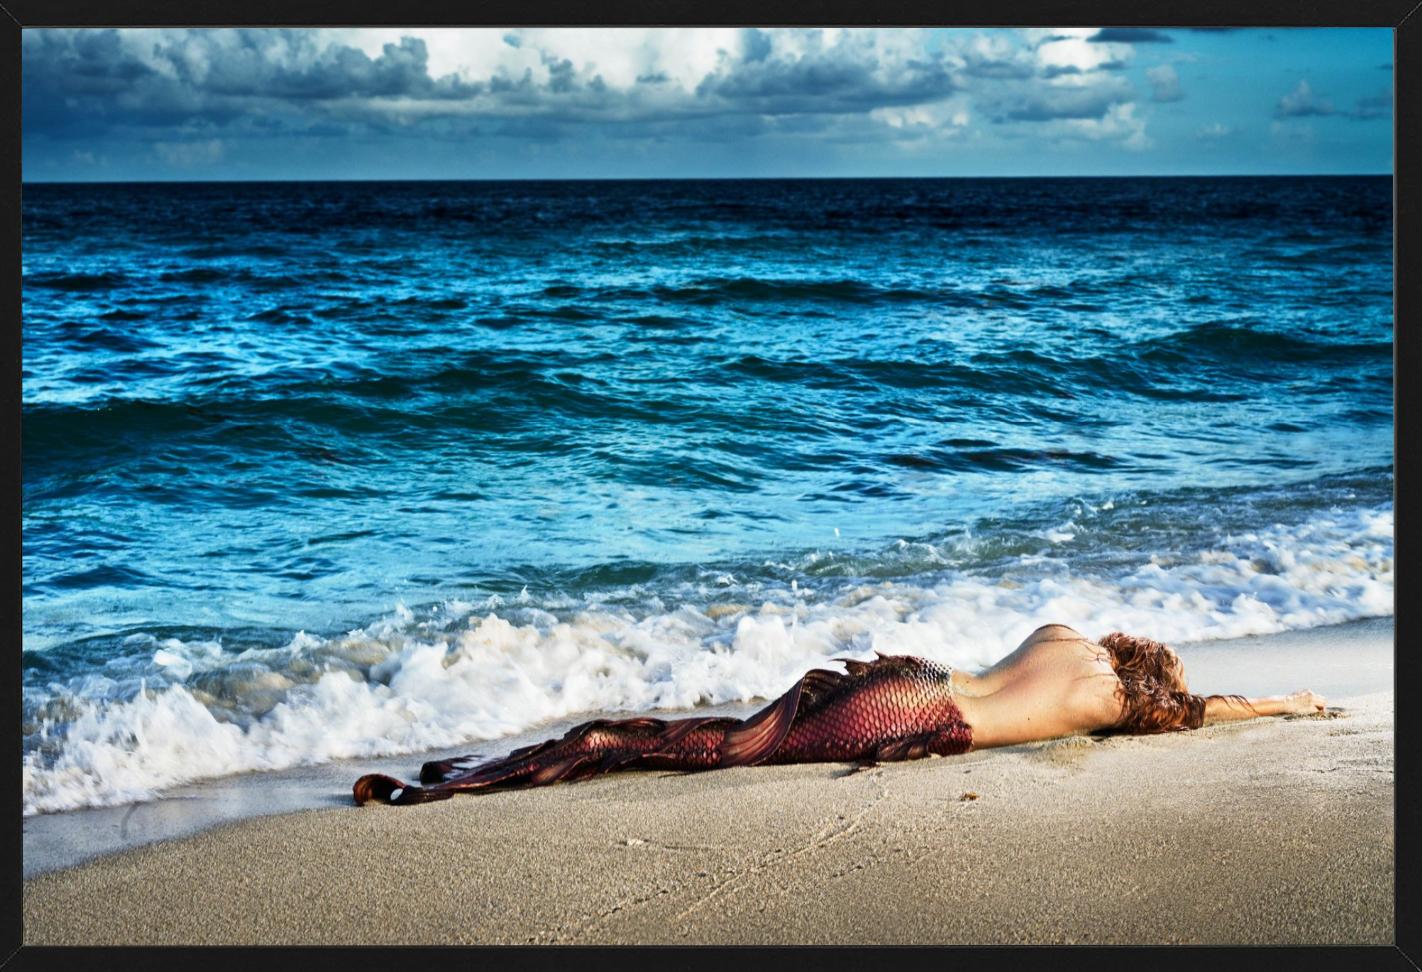 Mermaid in Paradise - Mermaid lying on the beach, fine art photography, 2014 - Blue Figurative Photograph by David Drebin